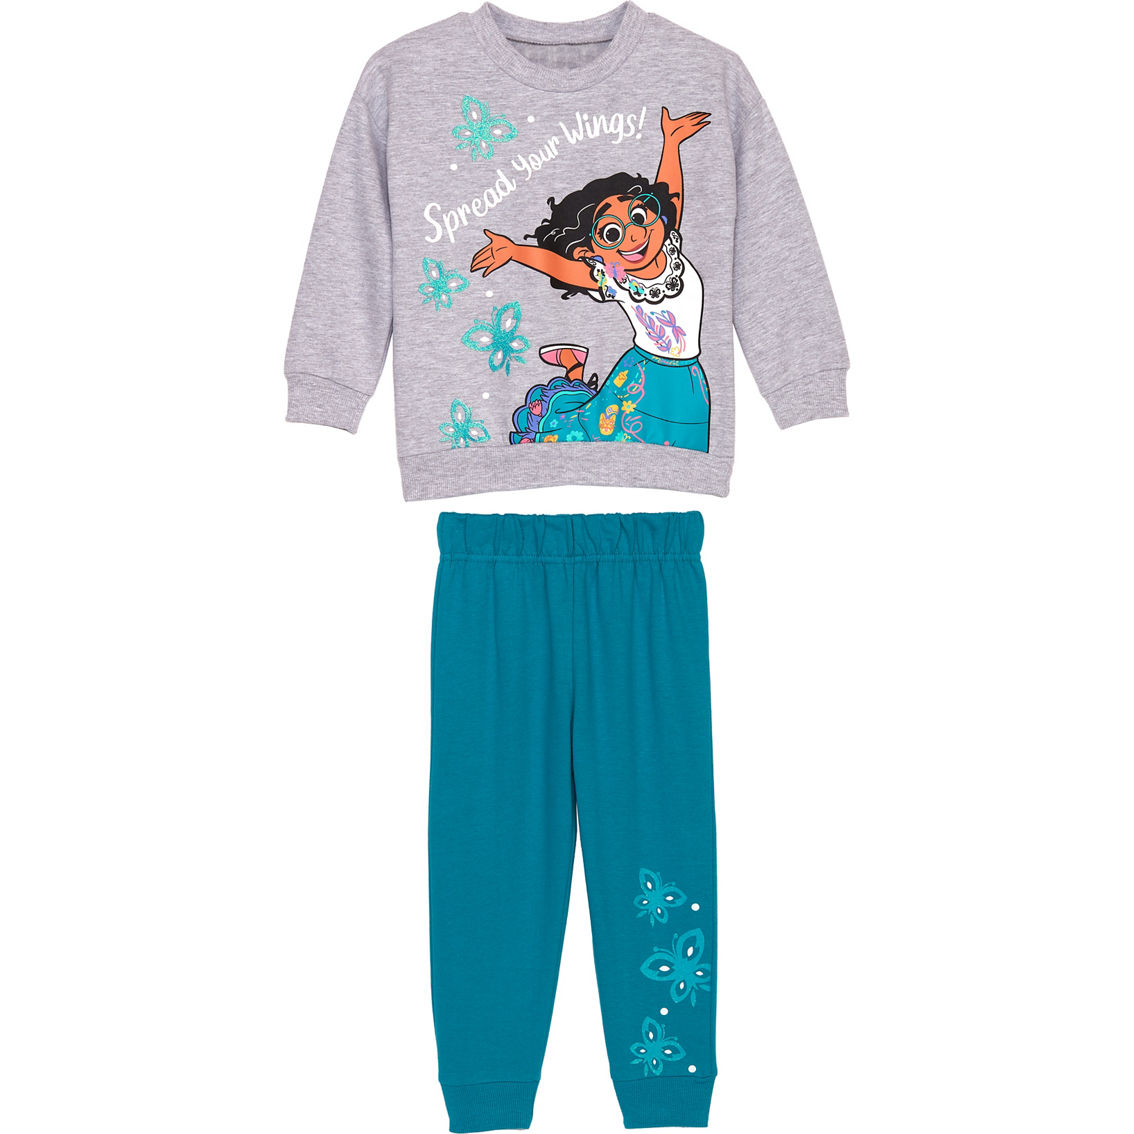 Disney Toddler Girls Encanto Fleece Sweater and Jogger Pants 2 pc. Set - Image 1 of 2